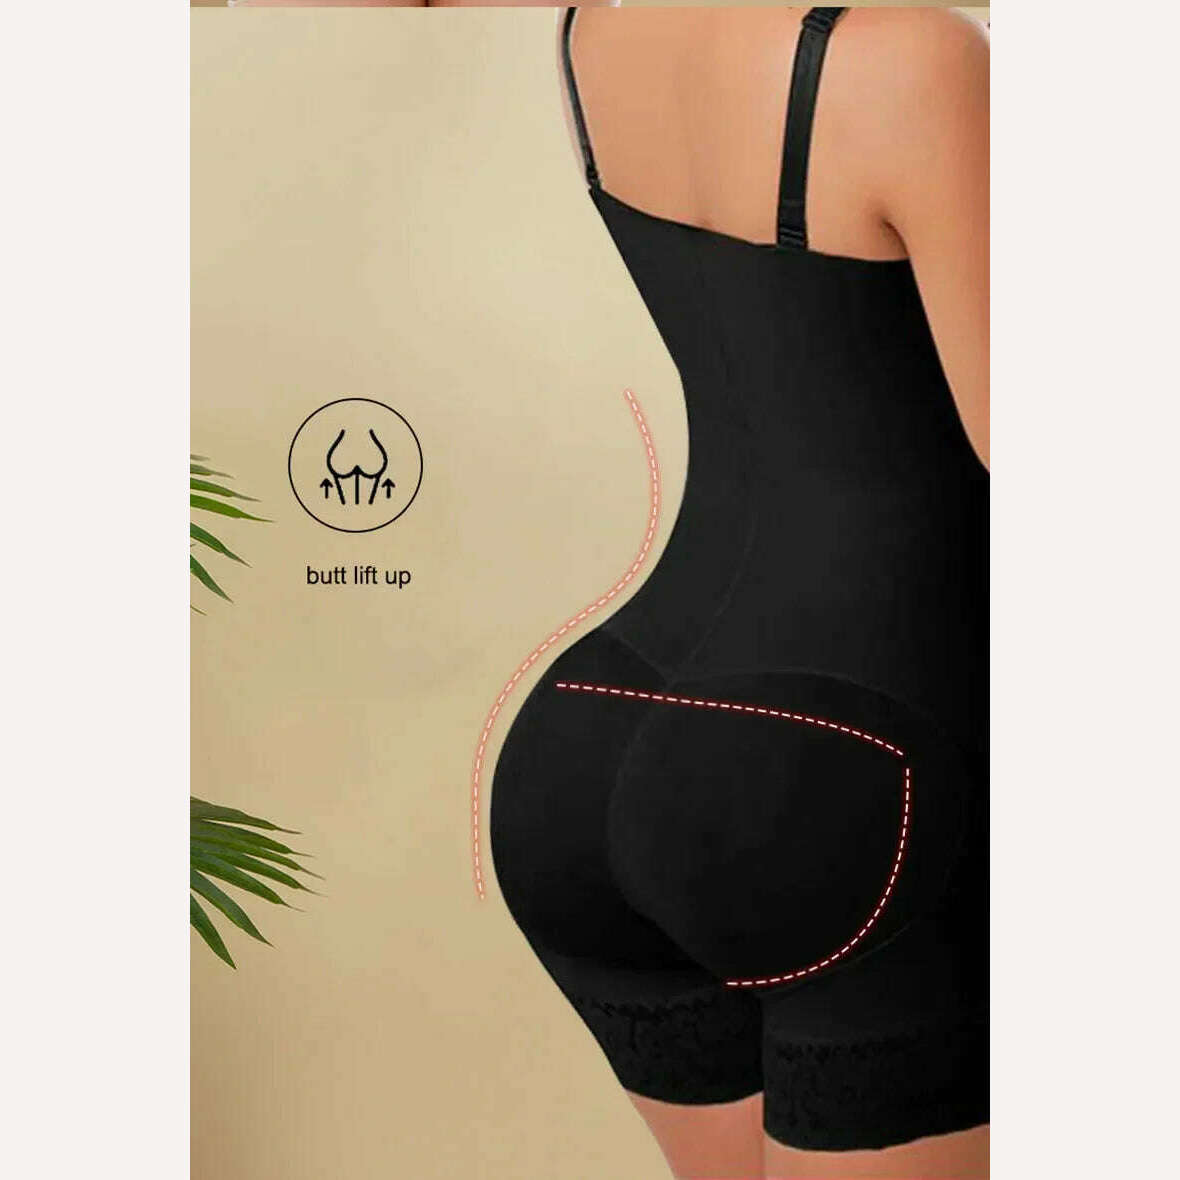 KIMLUD, AfruliA Fajas Colombiana Girdle Full Body Shaper Lift Up Butt Lifter Bodysuits Tummy Control Panties Waist Trainer Thigh Slimmer, KIMLUD Women's Clothes